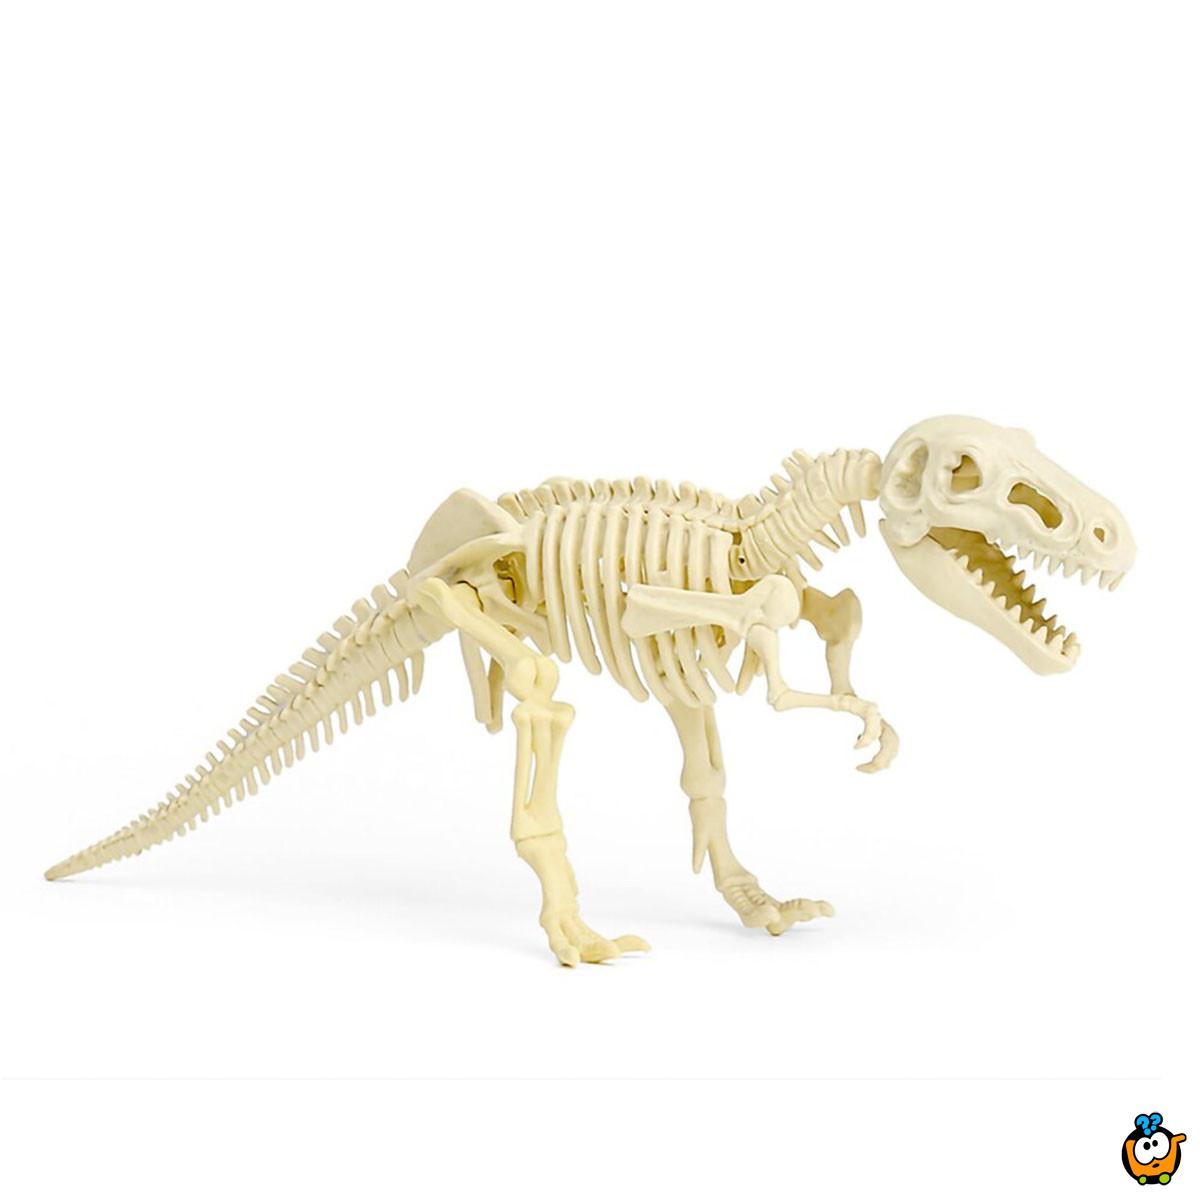 Set dino cigla - Iskopaj fosil dinosaurusa i sastavi skelet